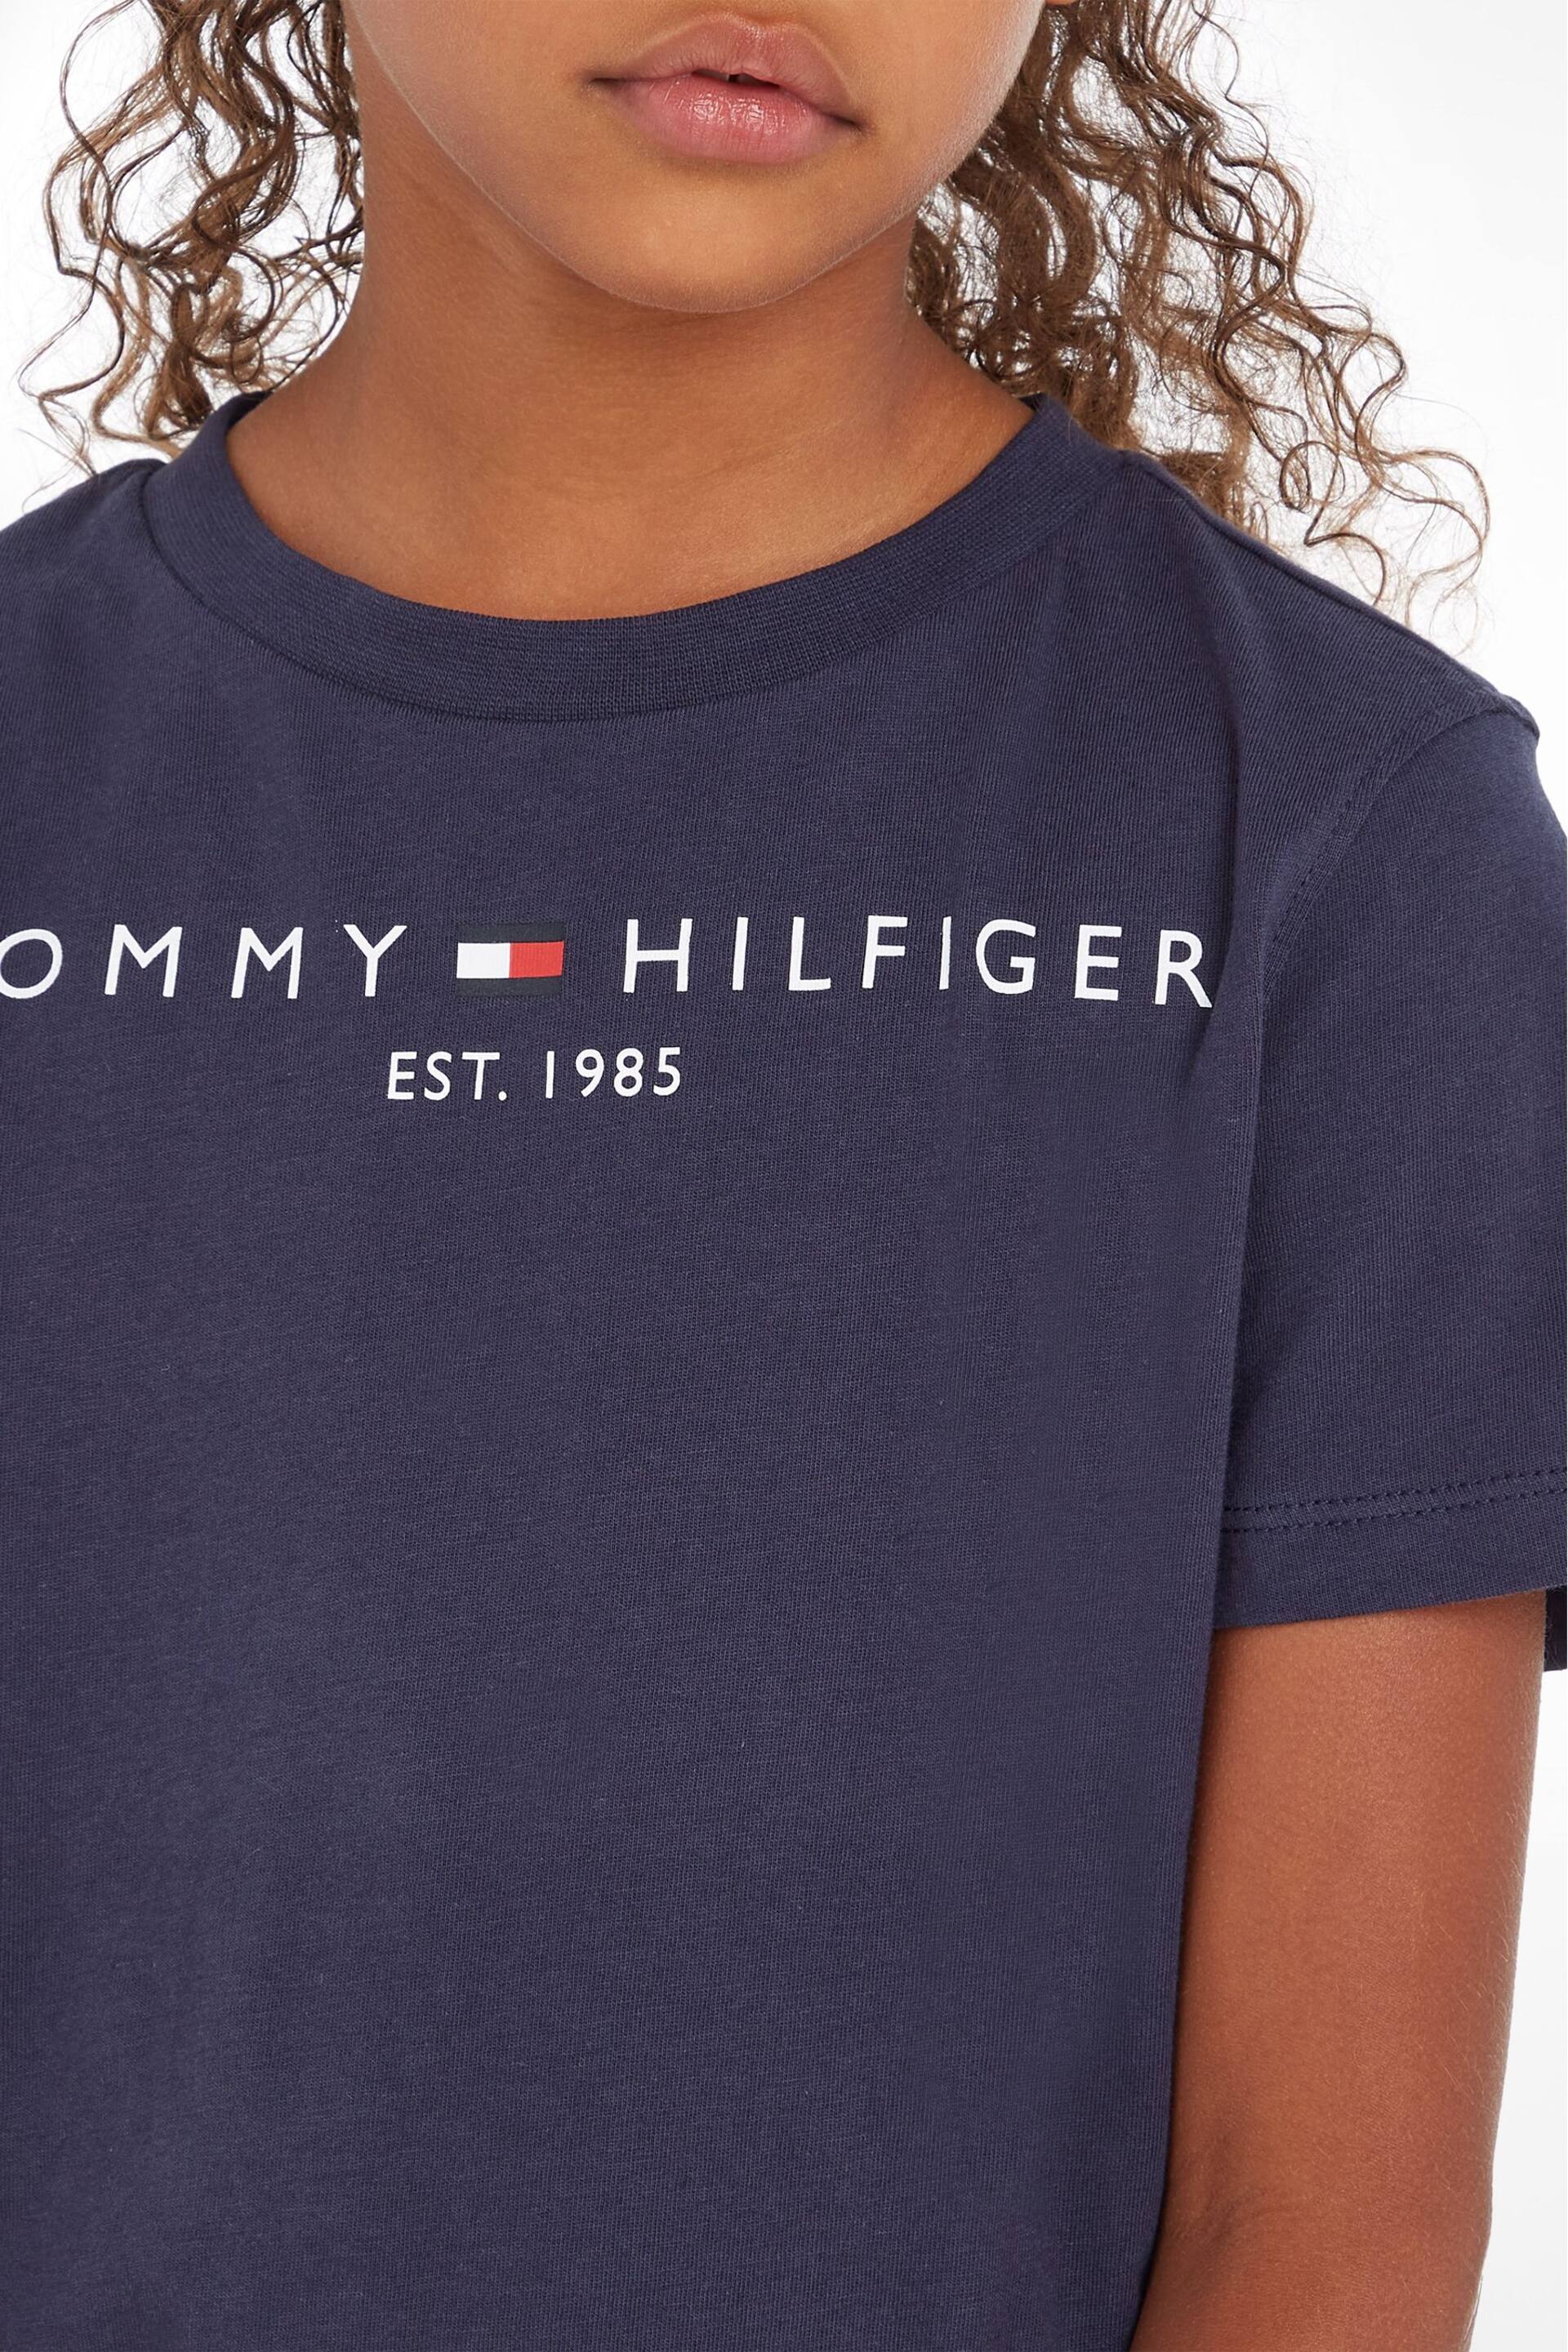 Tommy Hilfiger Blue Essential T-Shirt - Image 4 of 5